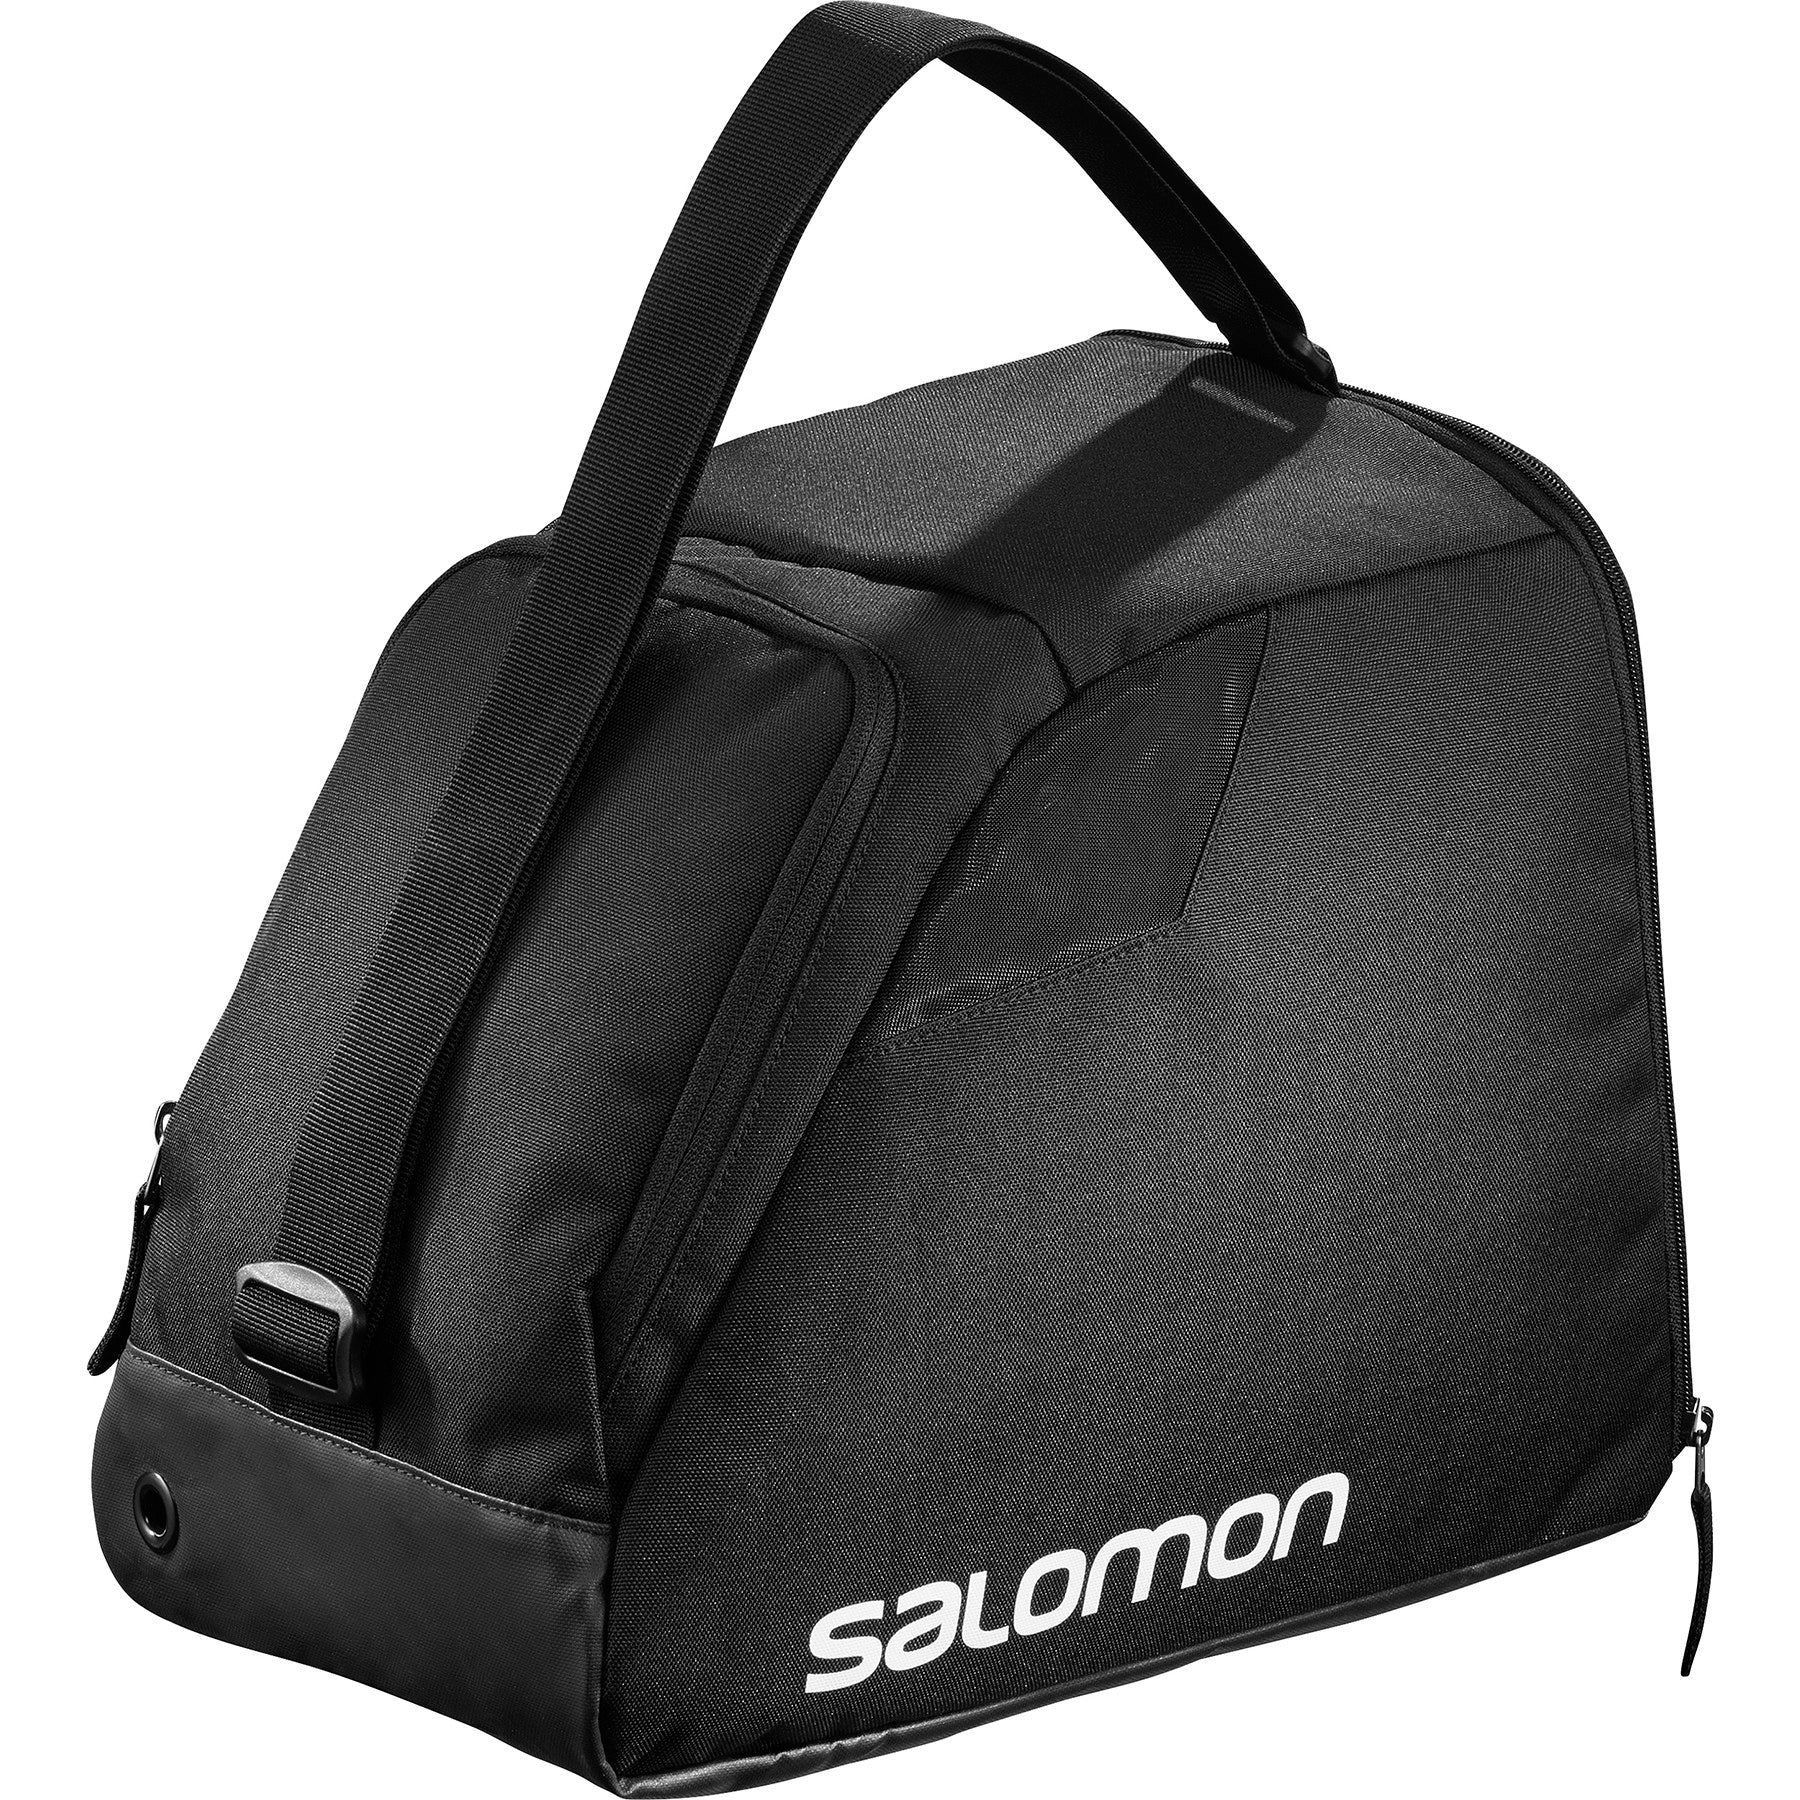 Salomon Nordic Gear Bag - 0